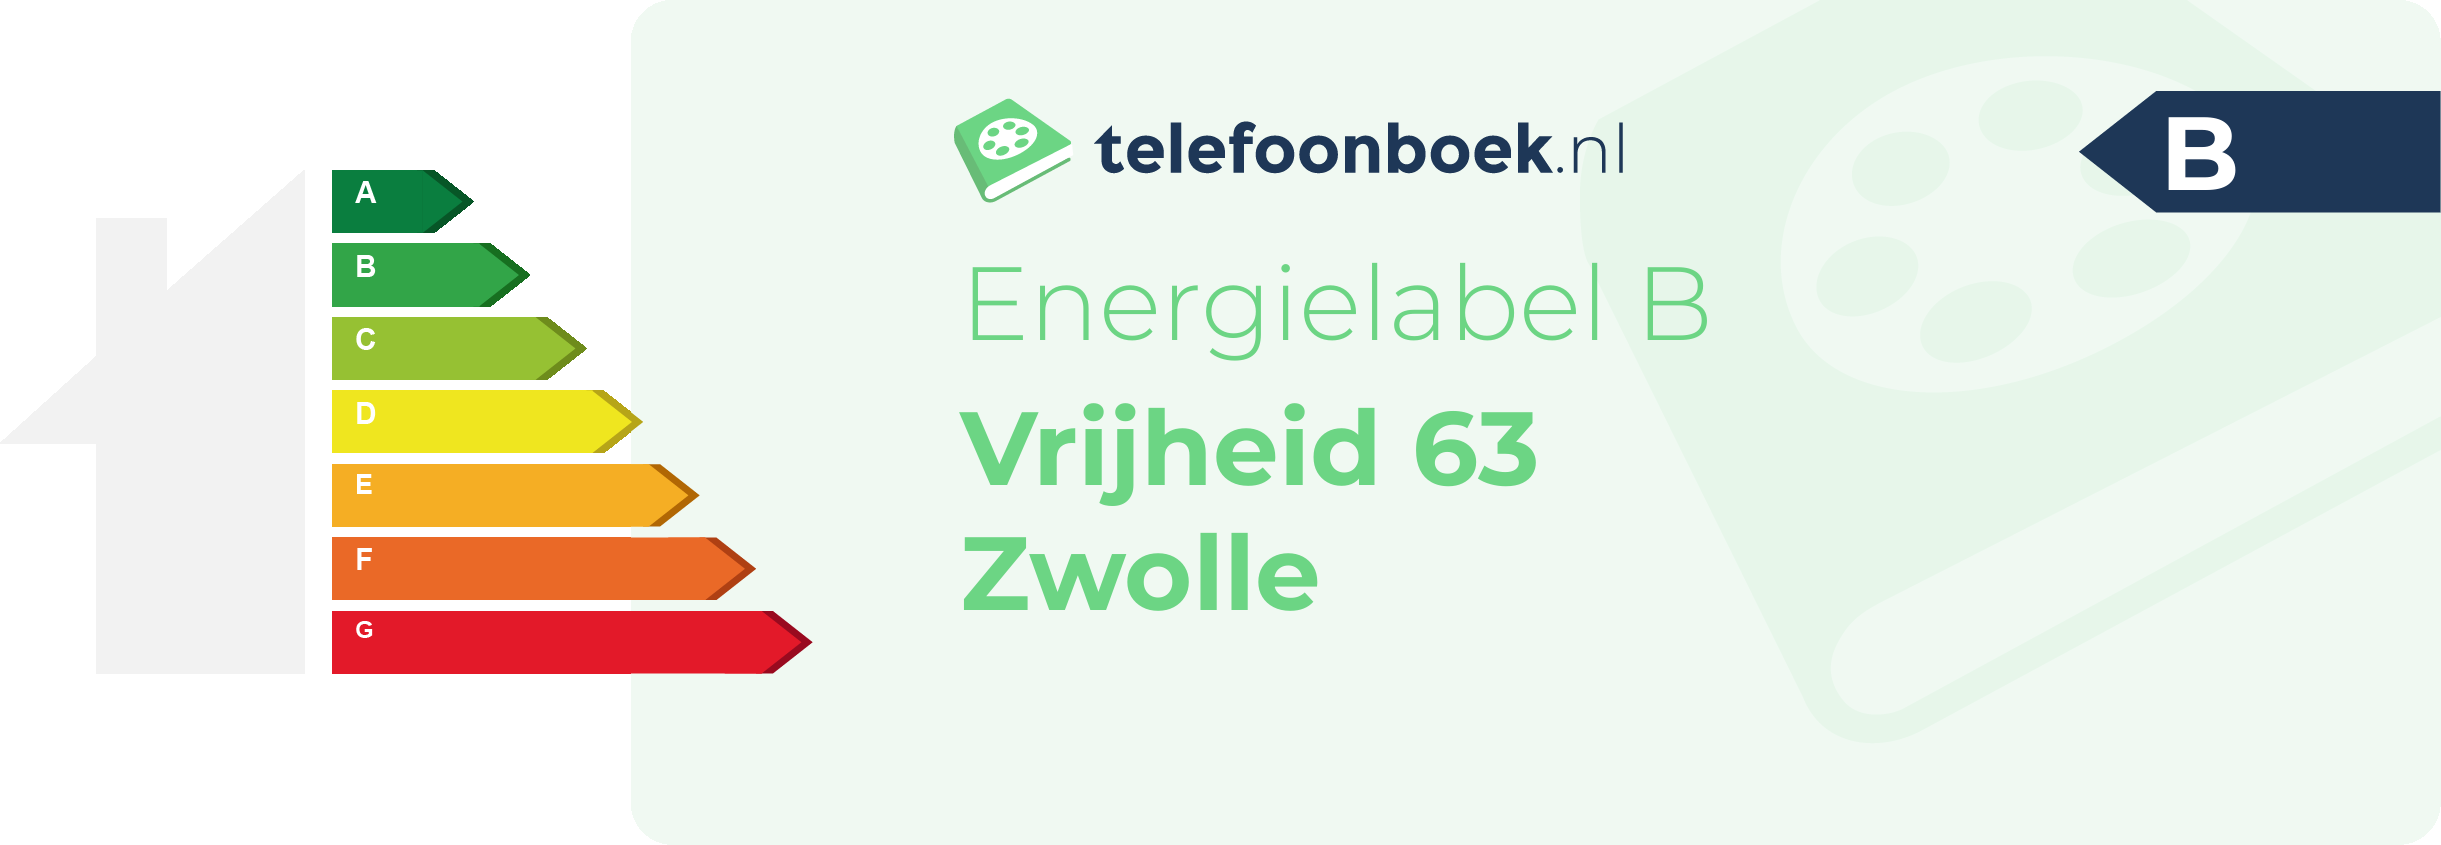 Energielabel Vrijheid 63 Zwolle